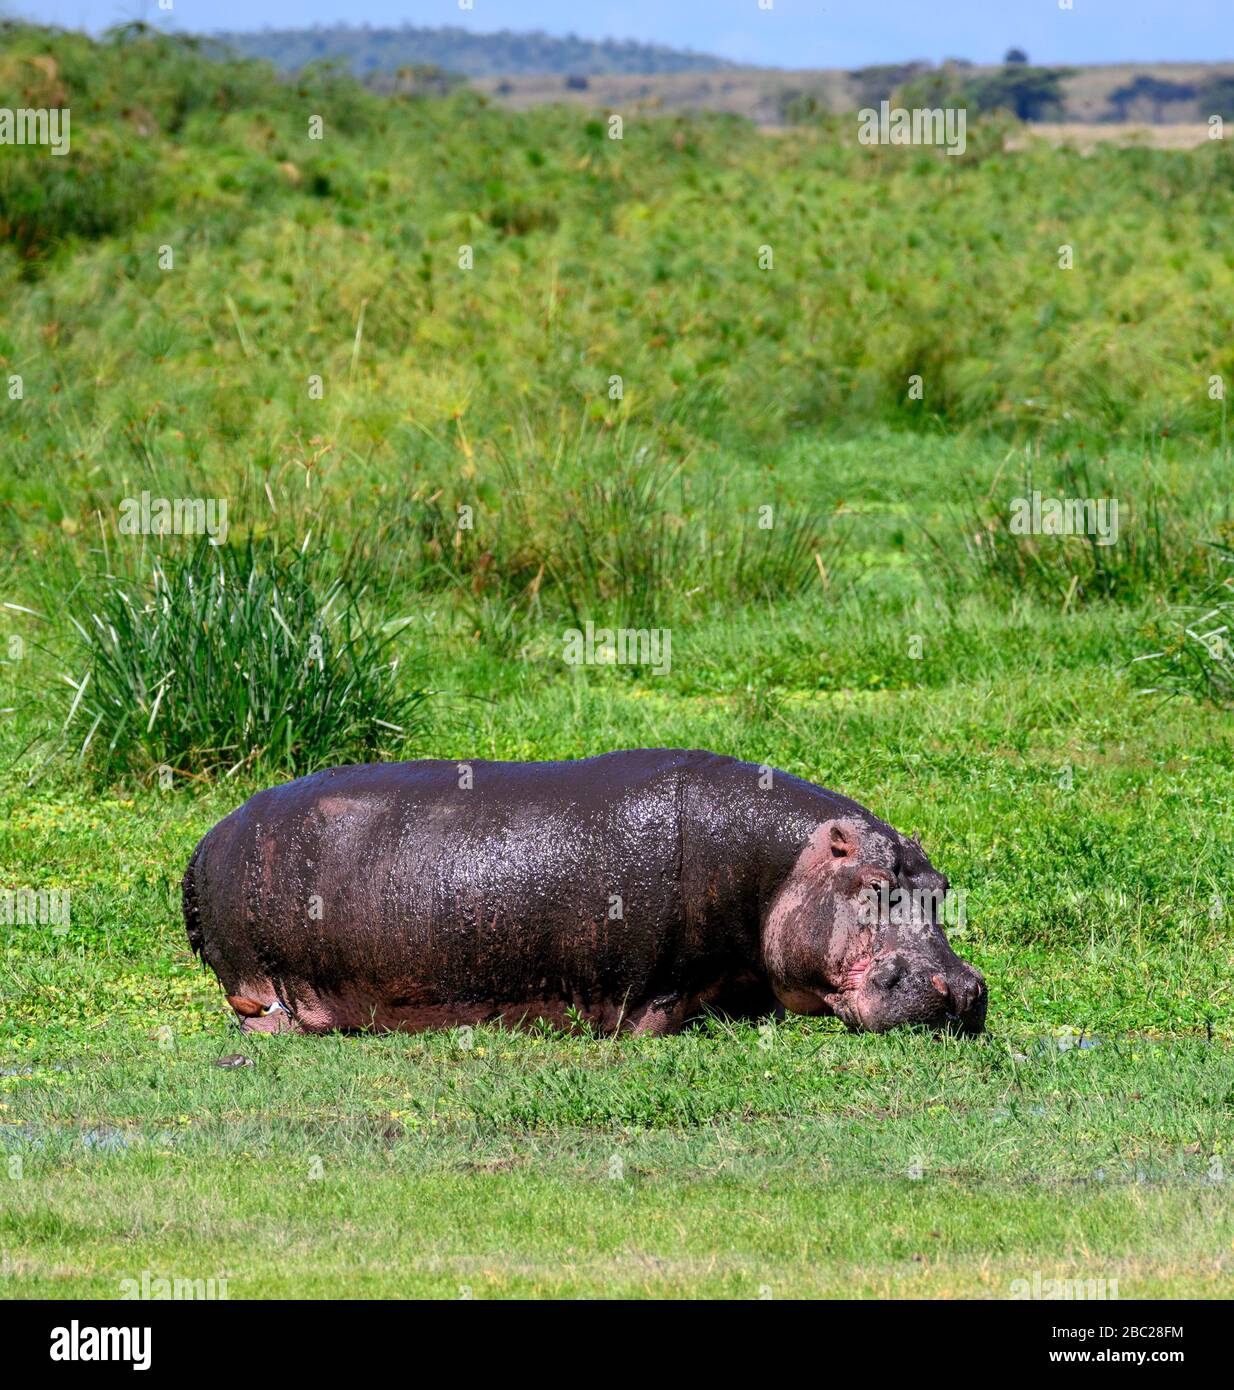 Common hippopotamus (Hippopotamus amphibius). Hippo grazing in Amboseli National Park, Kenya, Africa Stock Photo